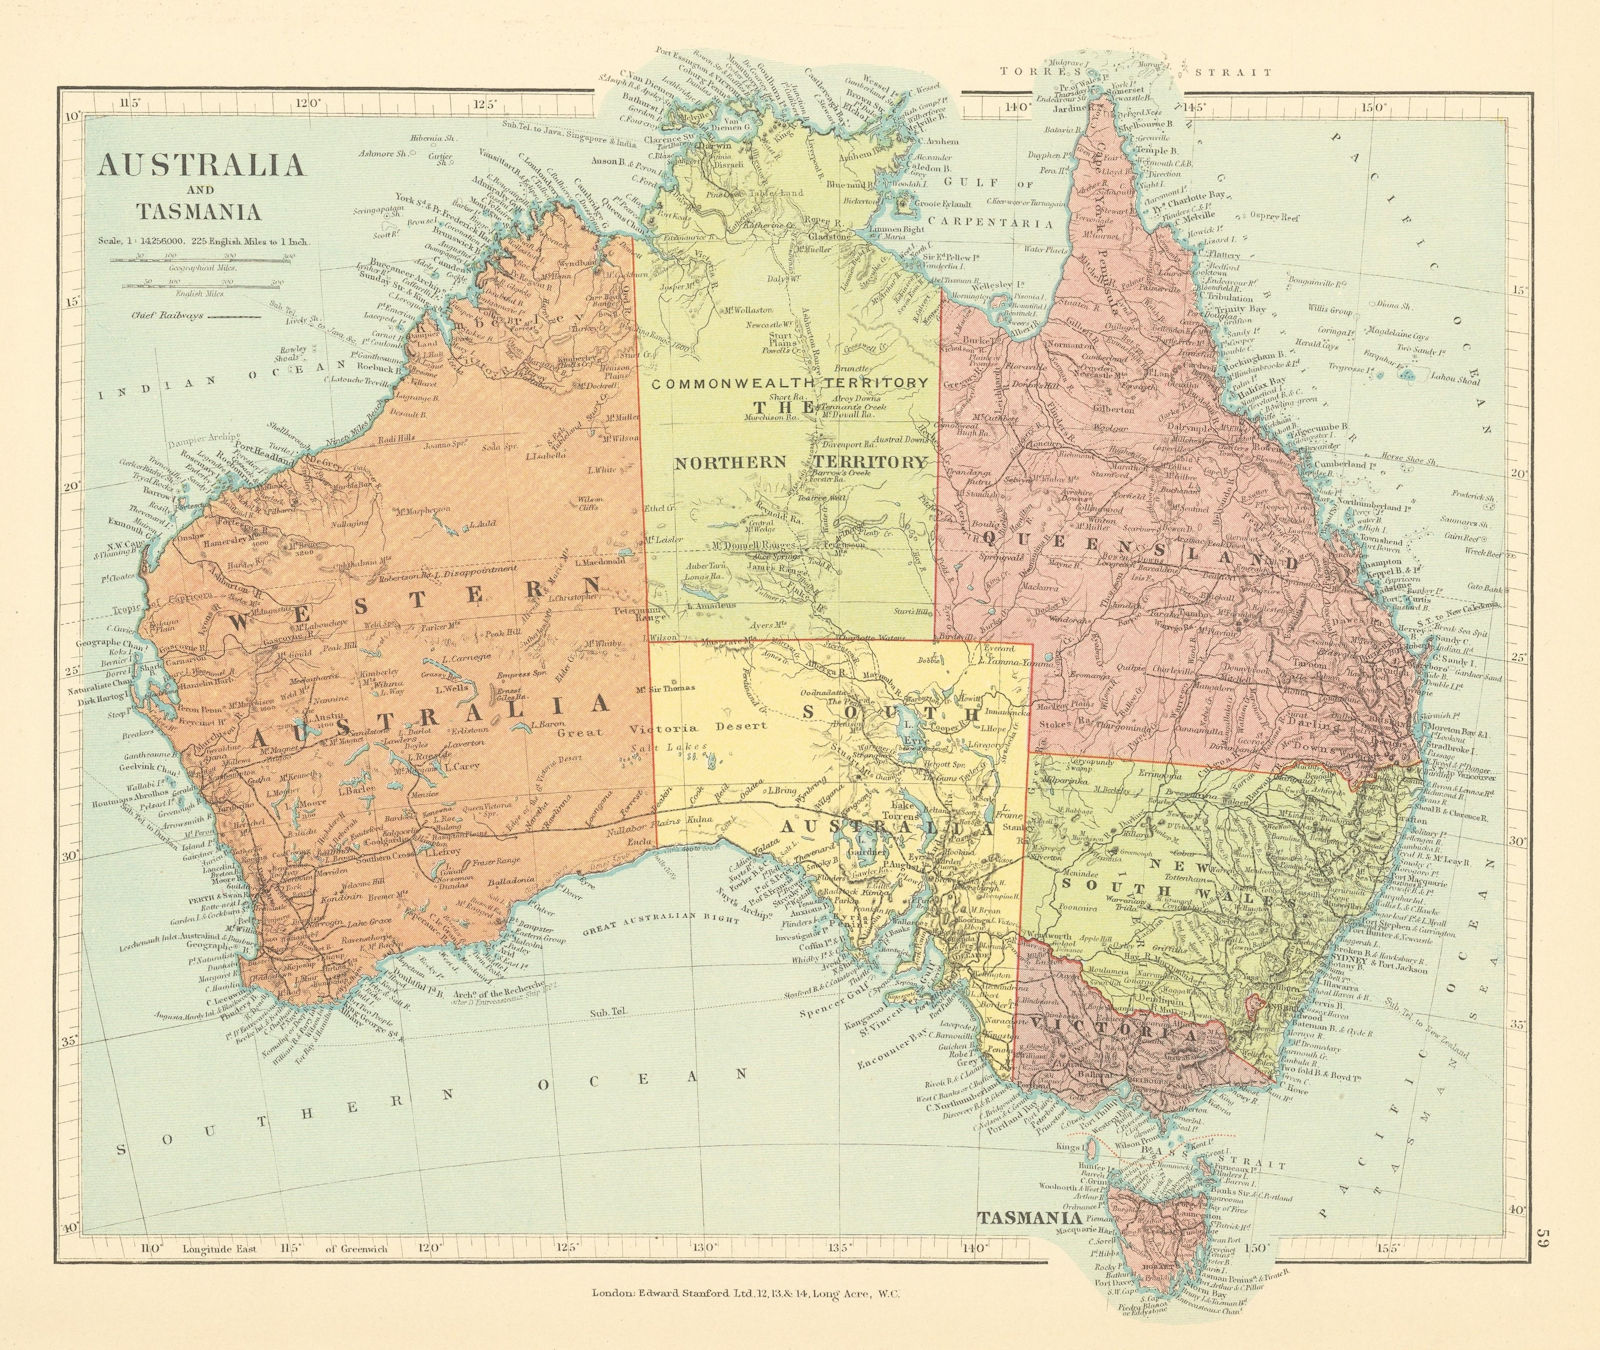 Australia Tasmania Northern Territory Commonwealth Territory STANFORD c1925 map